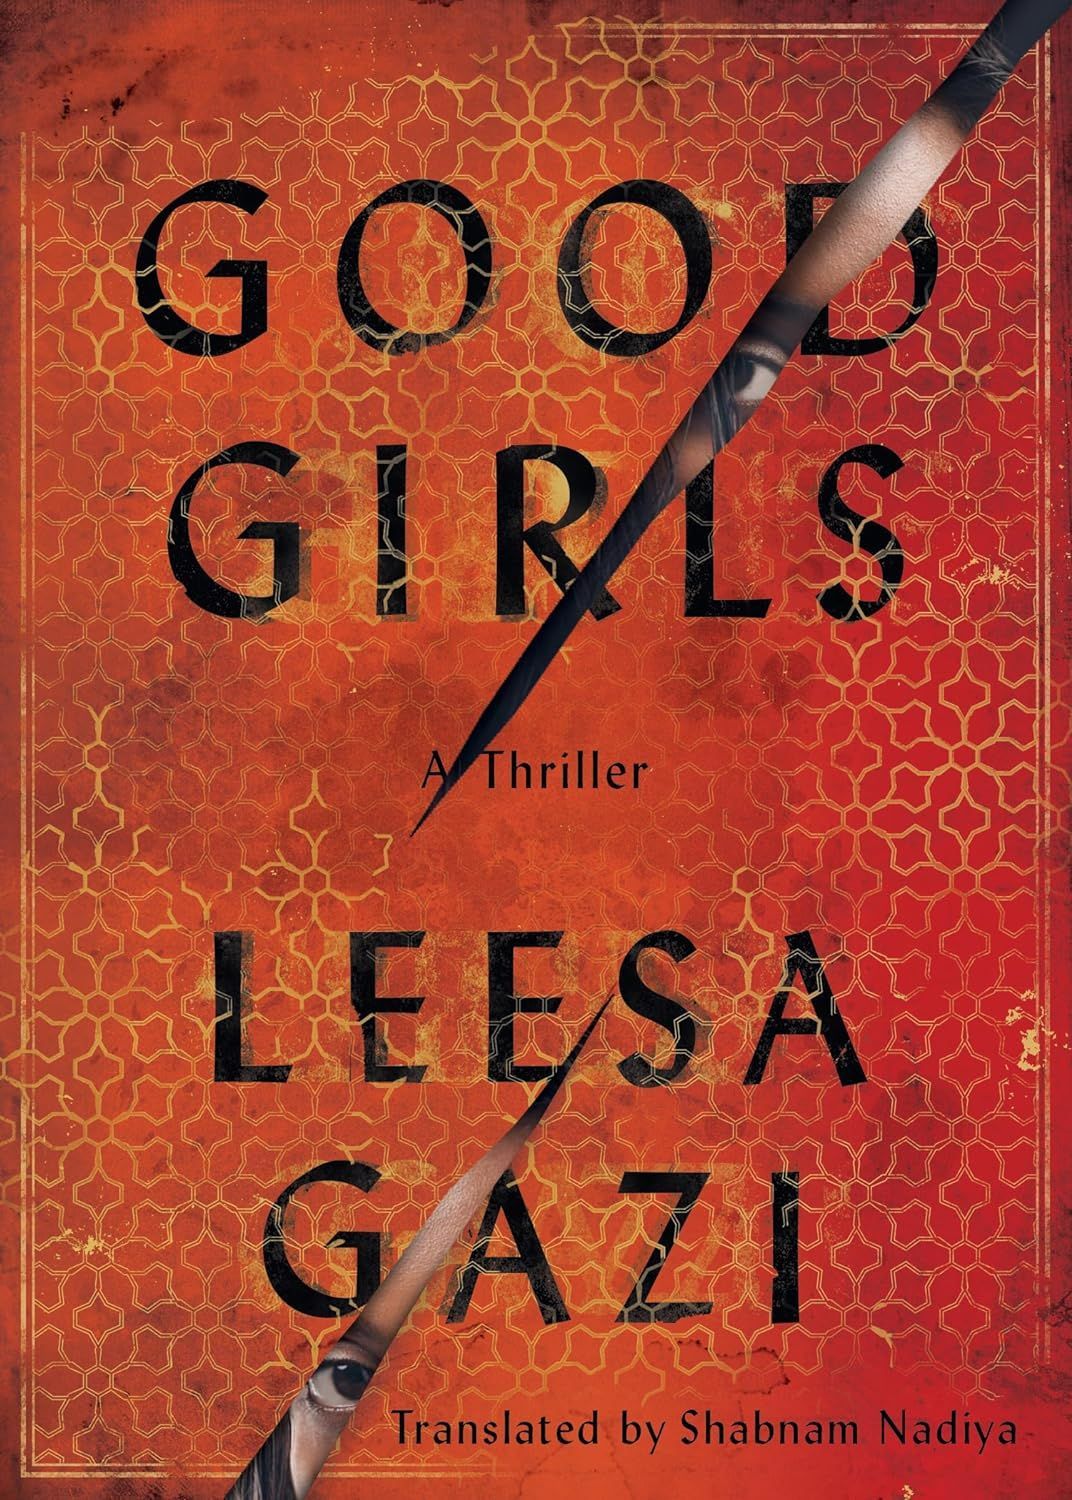 Urban Transgression and the Female Flâneur: On Leesa Gazi’s “Good Girls”